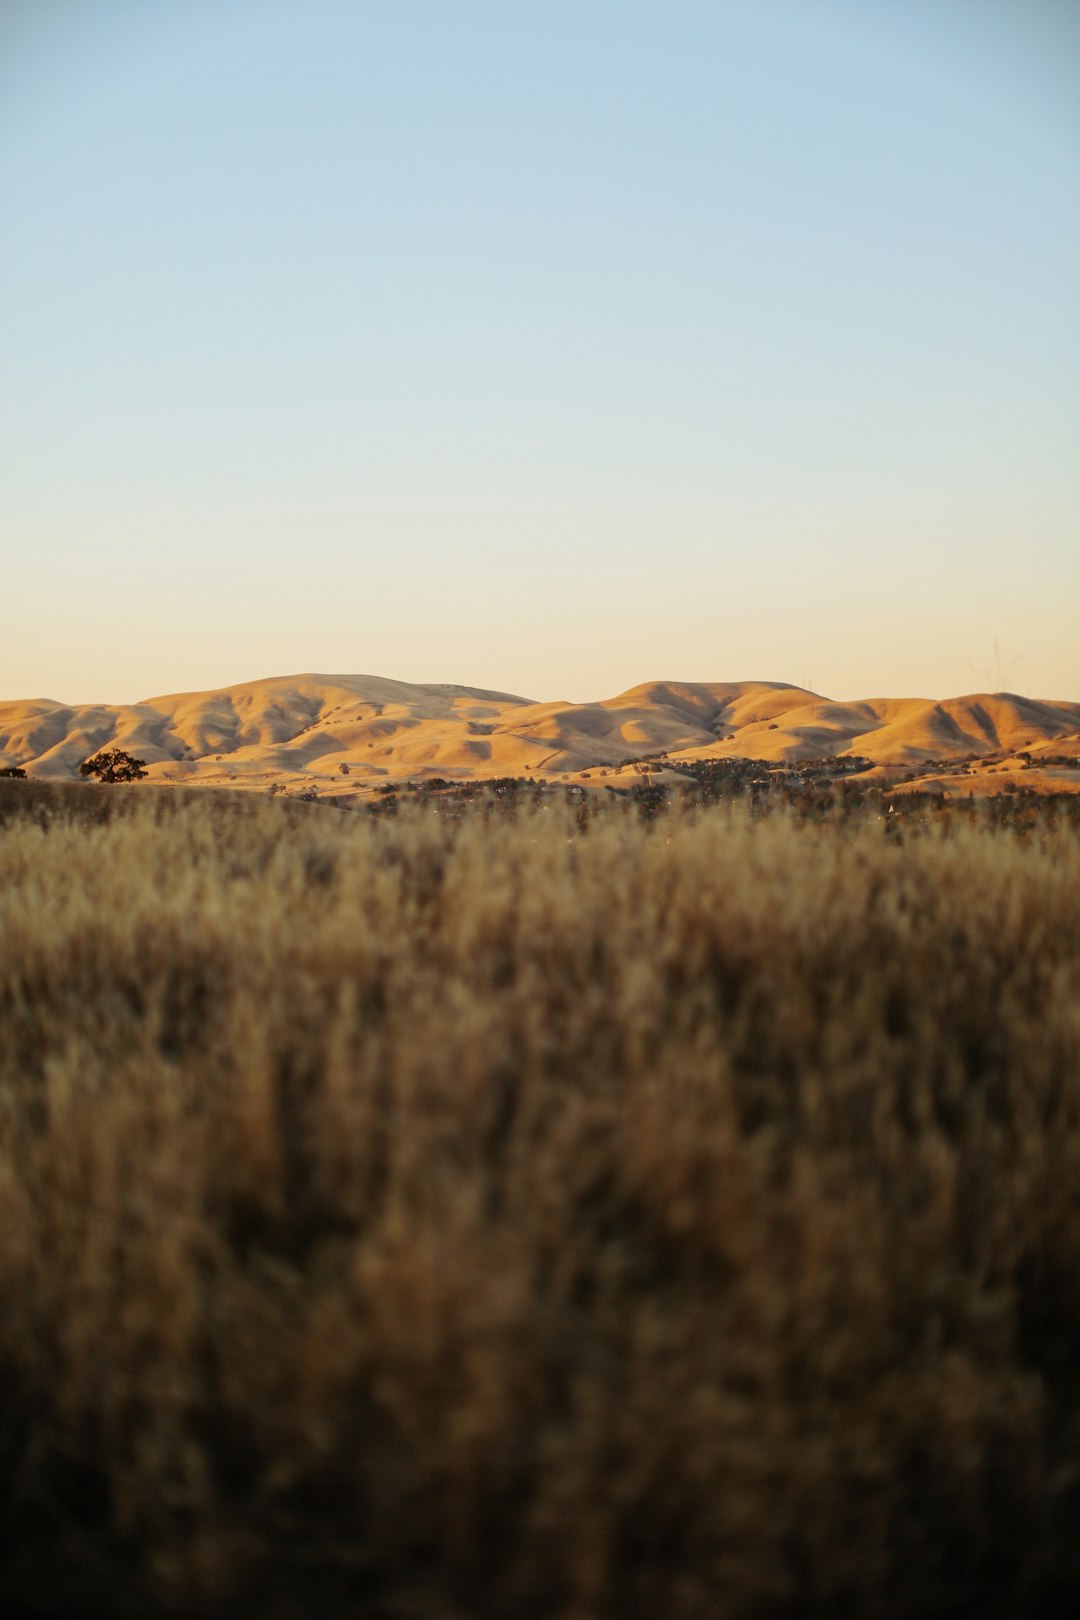 brown grass field near brown mountain during daytime